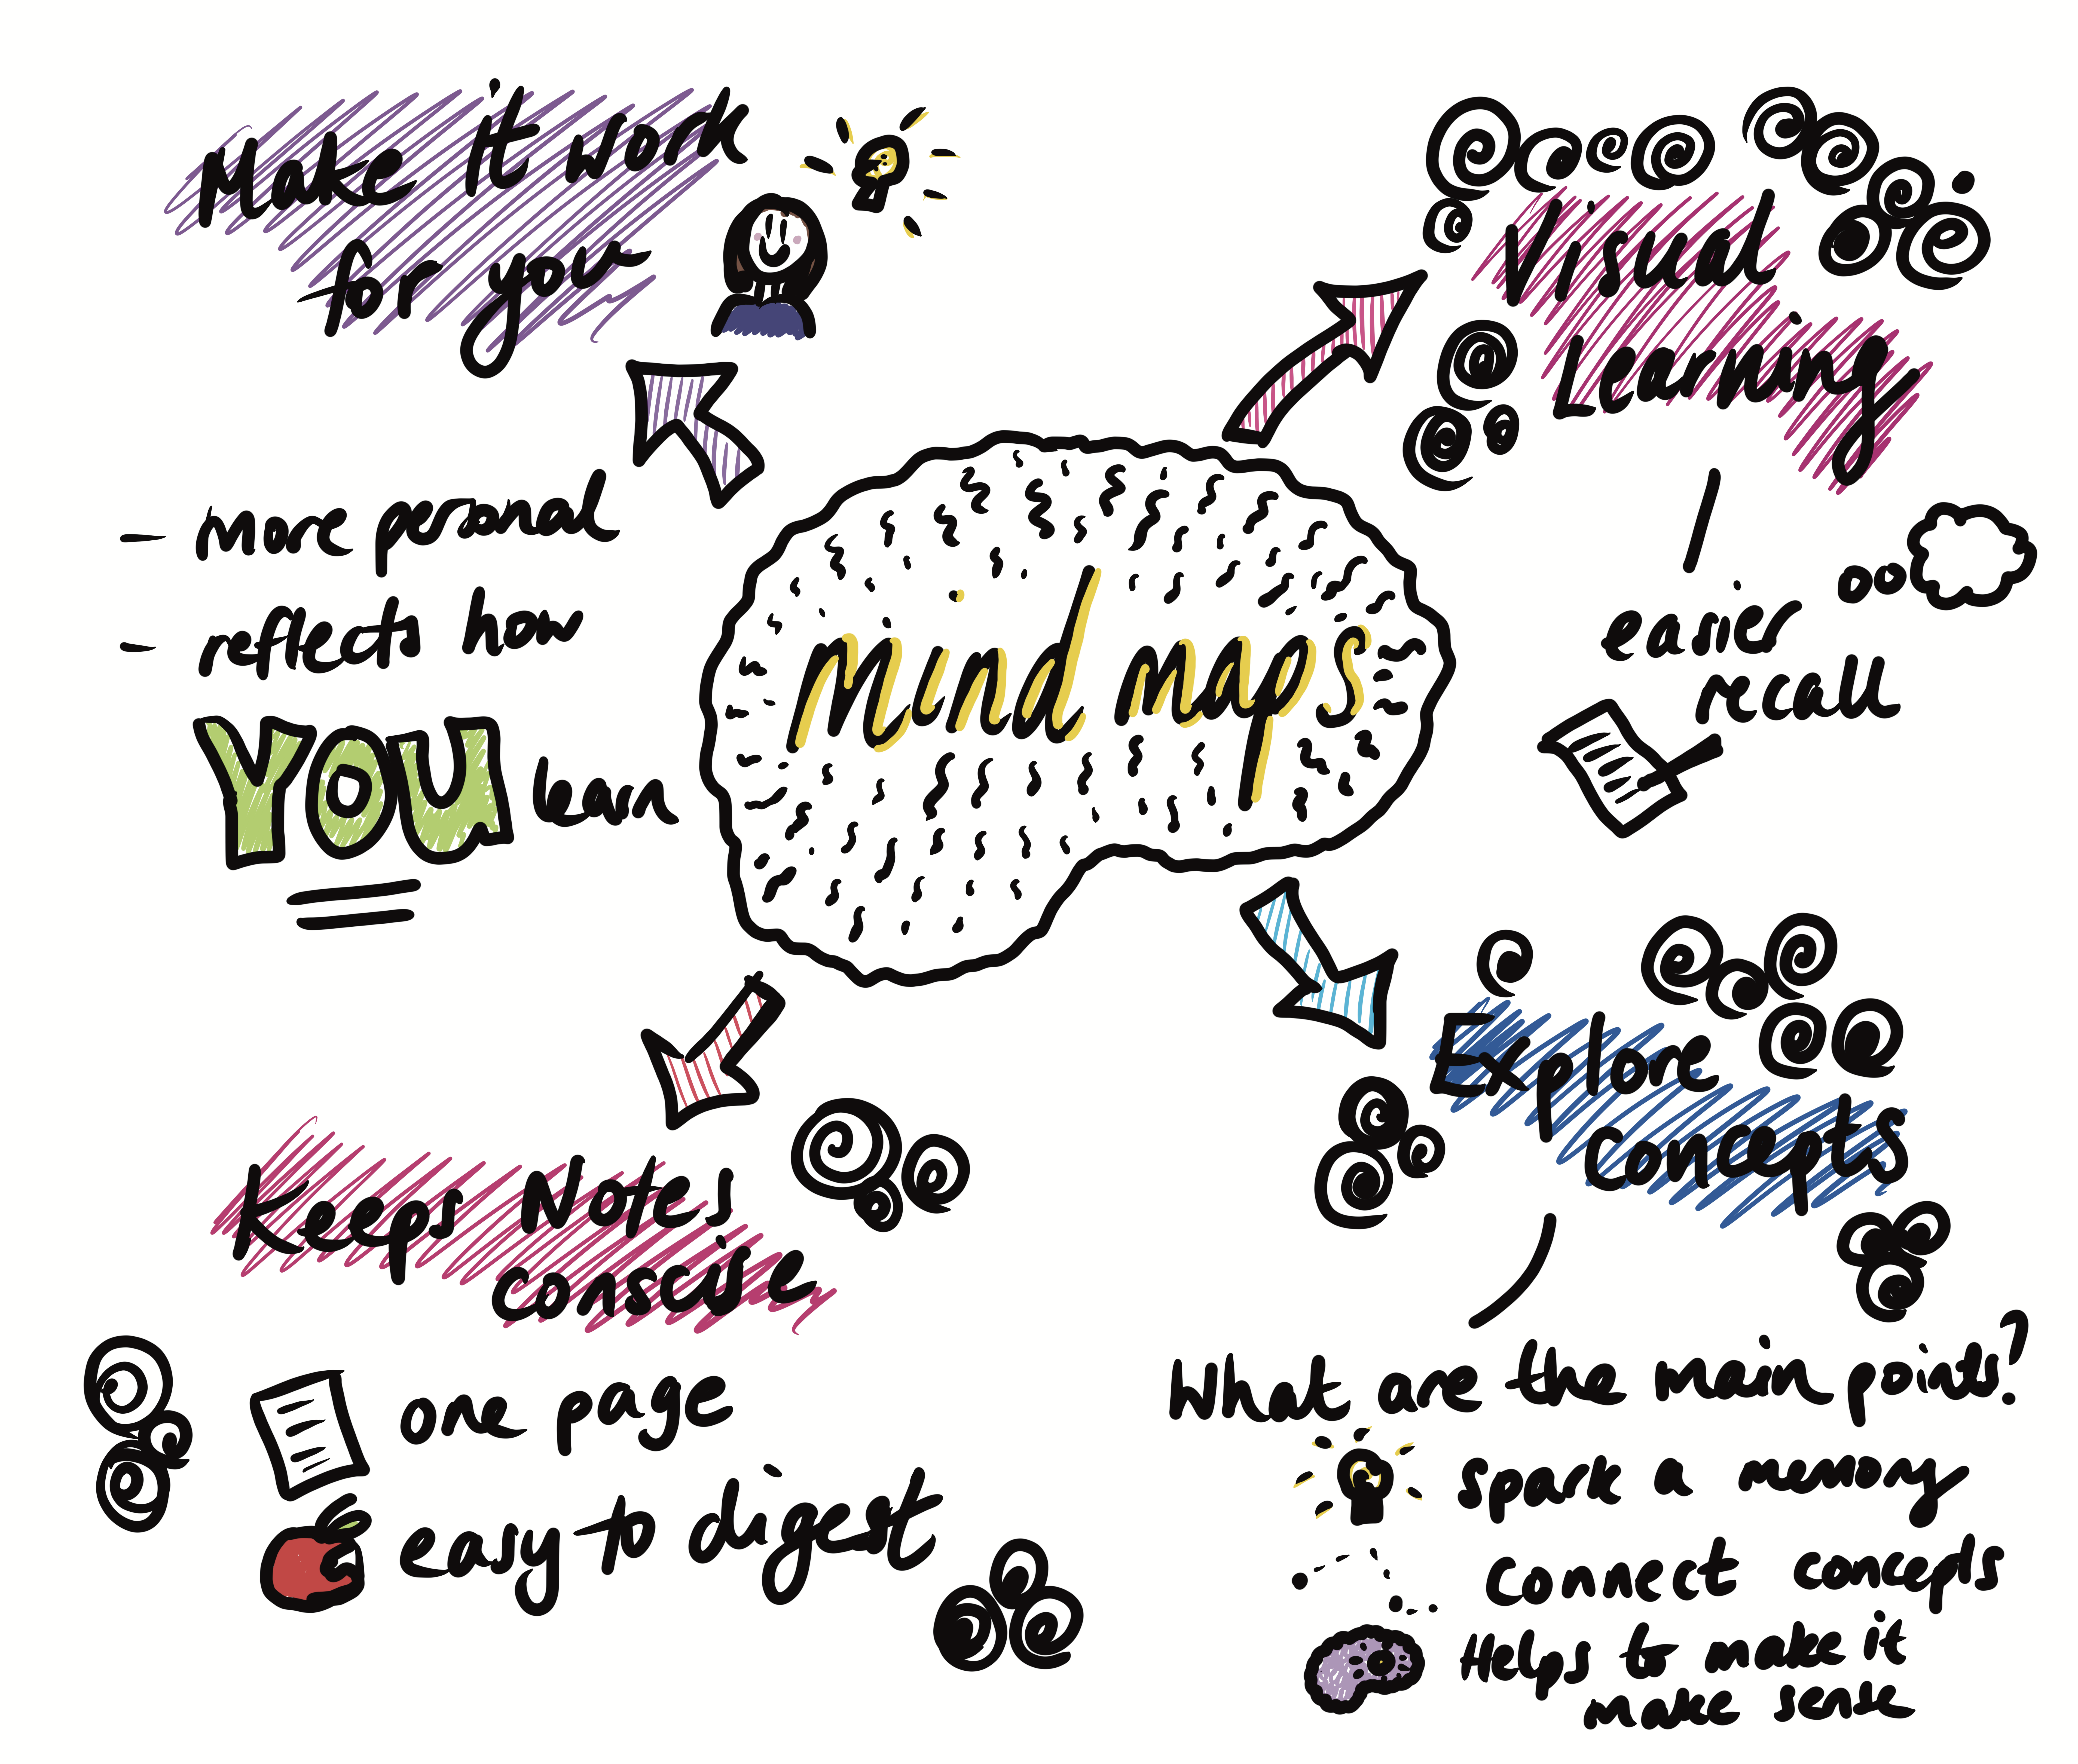 Mind-map